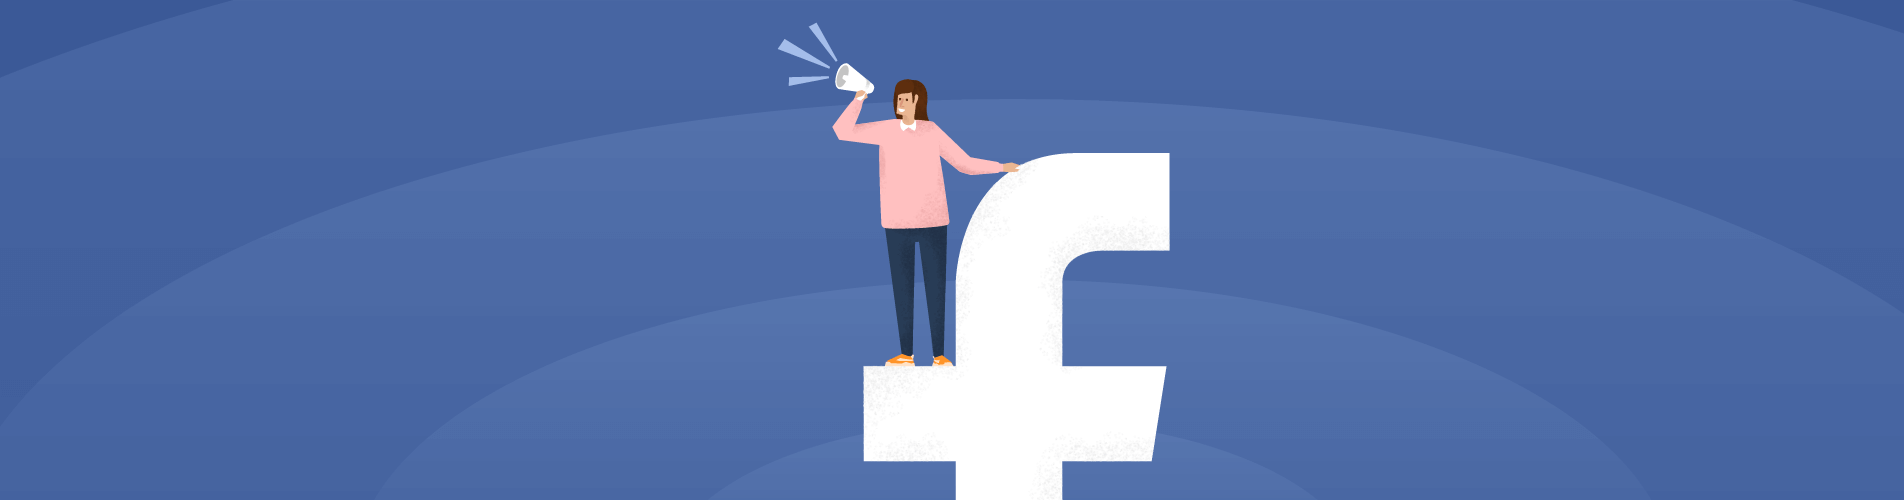 facebook marketing for teachers - the facebook logo stylized